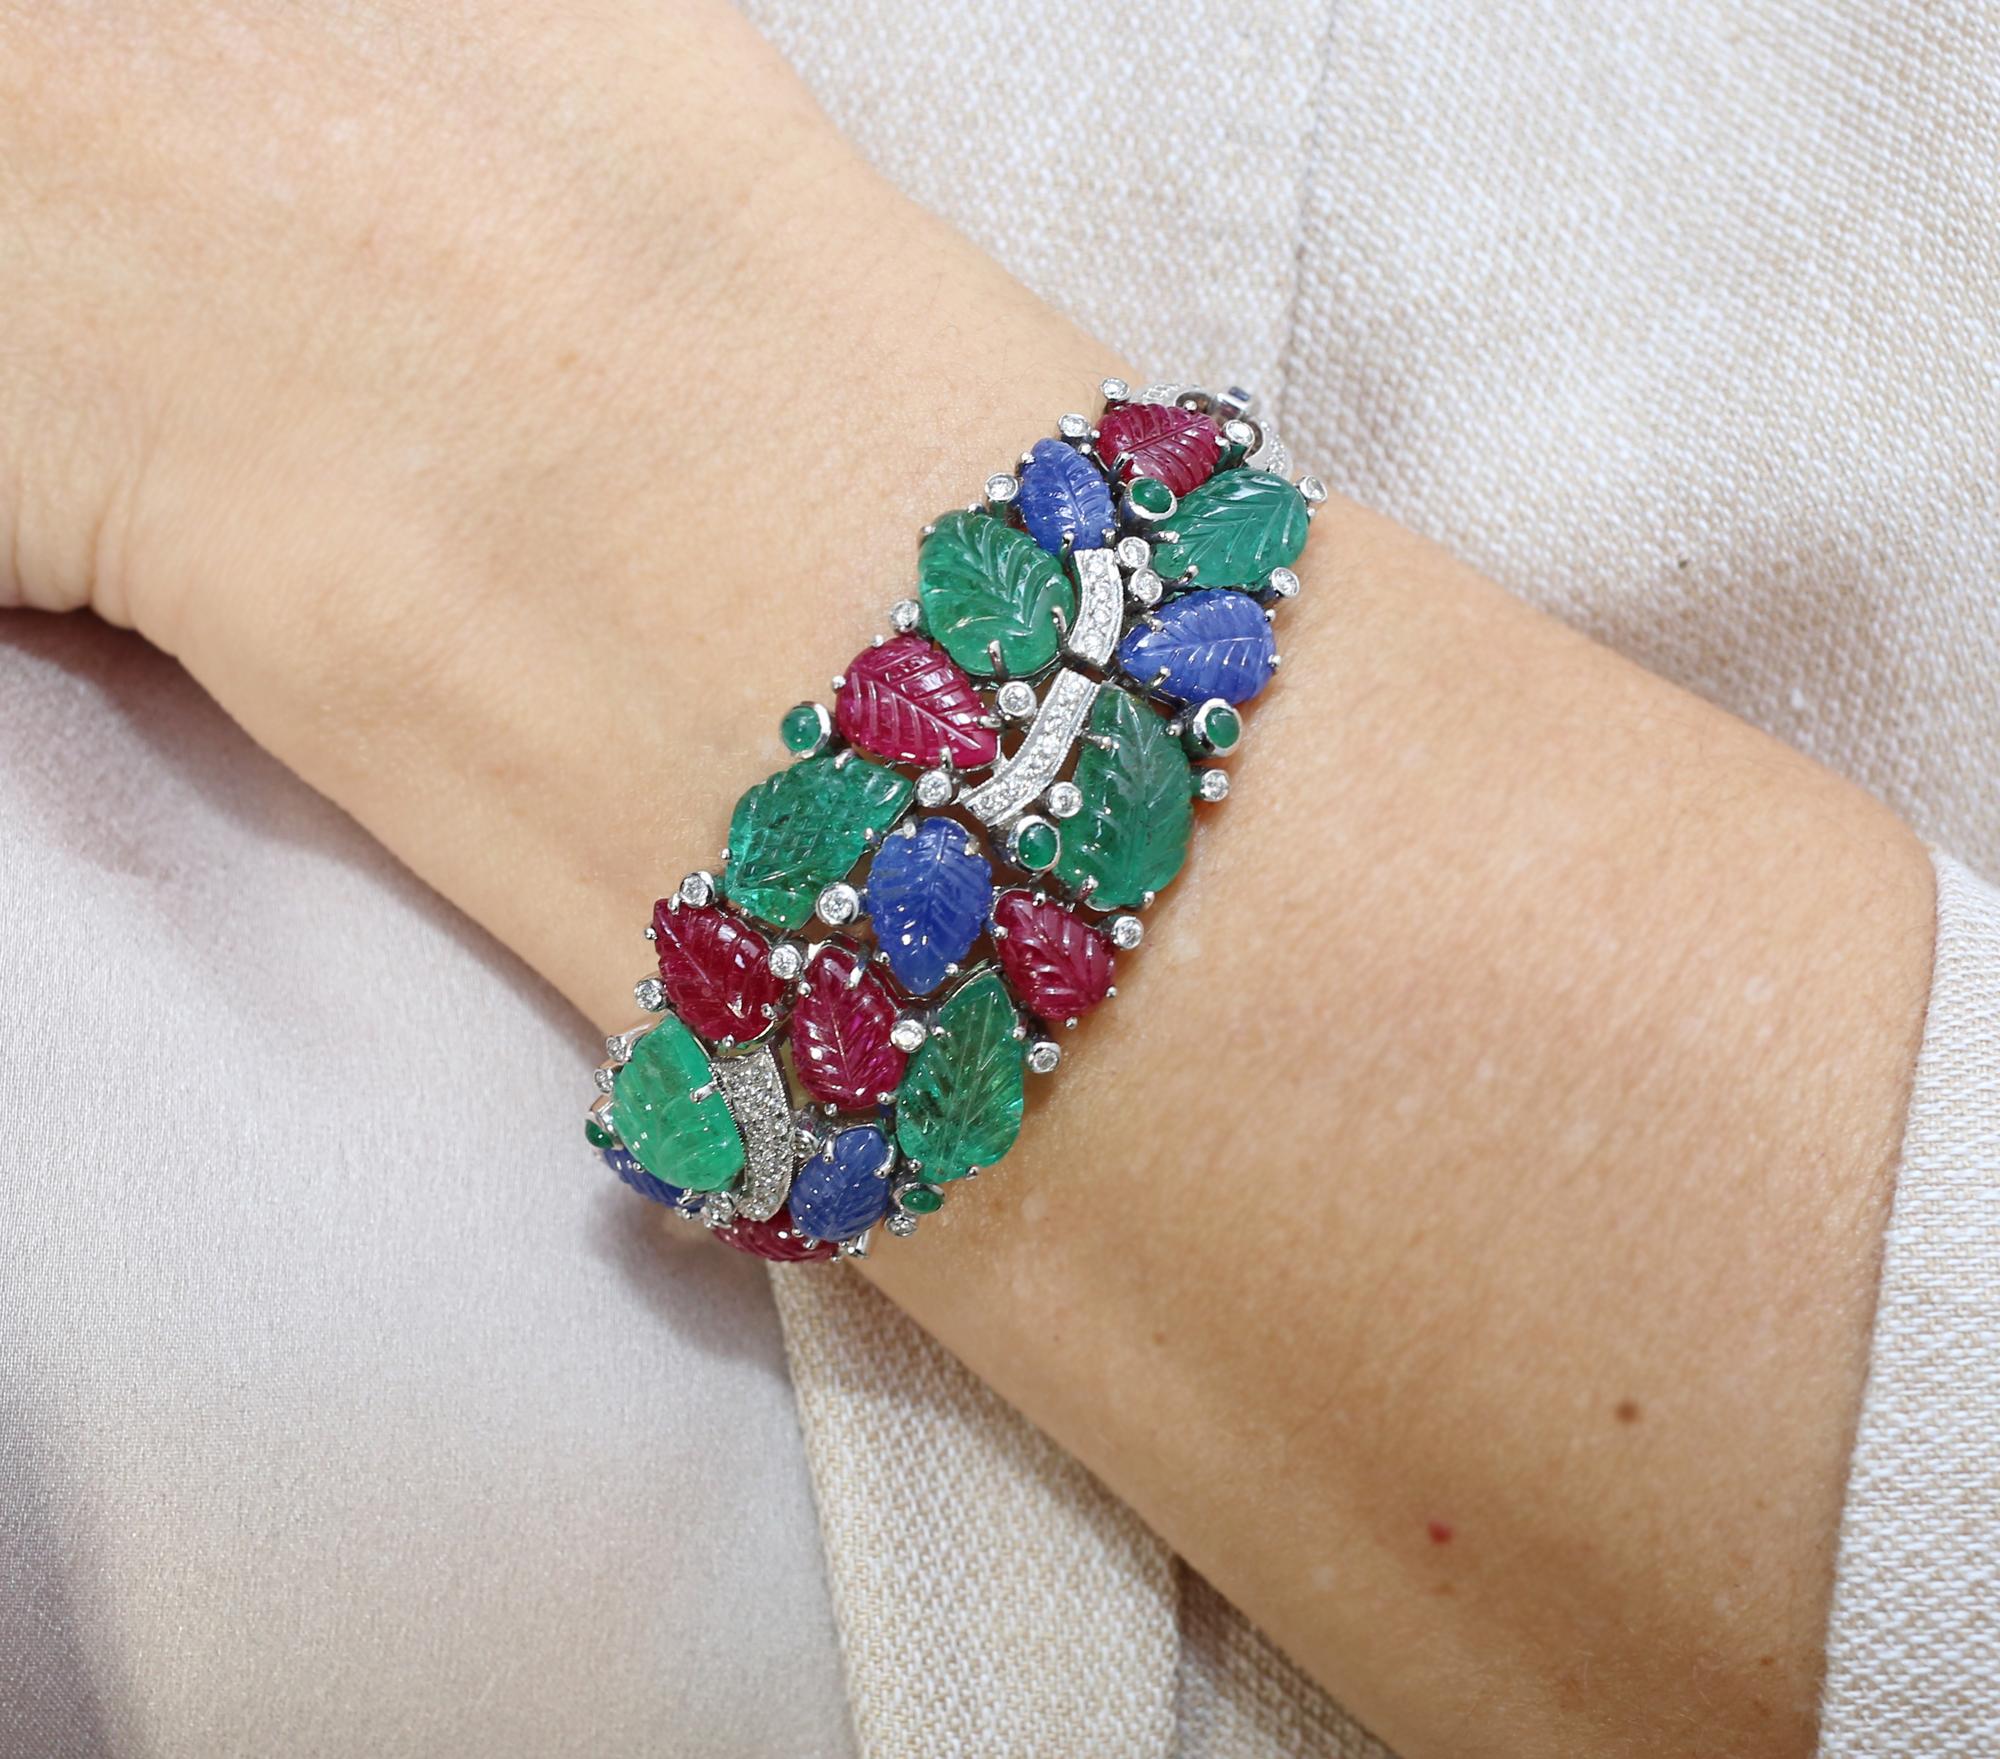 Tutti-Frutti Bracelet Rubies Sapphires Emeralds Diamonds 18 K Gold.
An elegant Tutti-Frutti bracelet in the style of the Art Deco era. Rubies, Sapphires, Emeralds.
This item is a modern, 1996, interpretation of the great idea. The bracelet is made